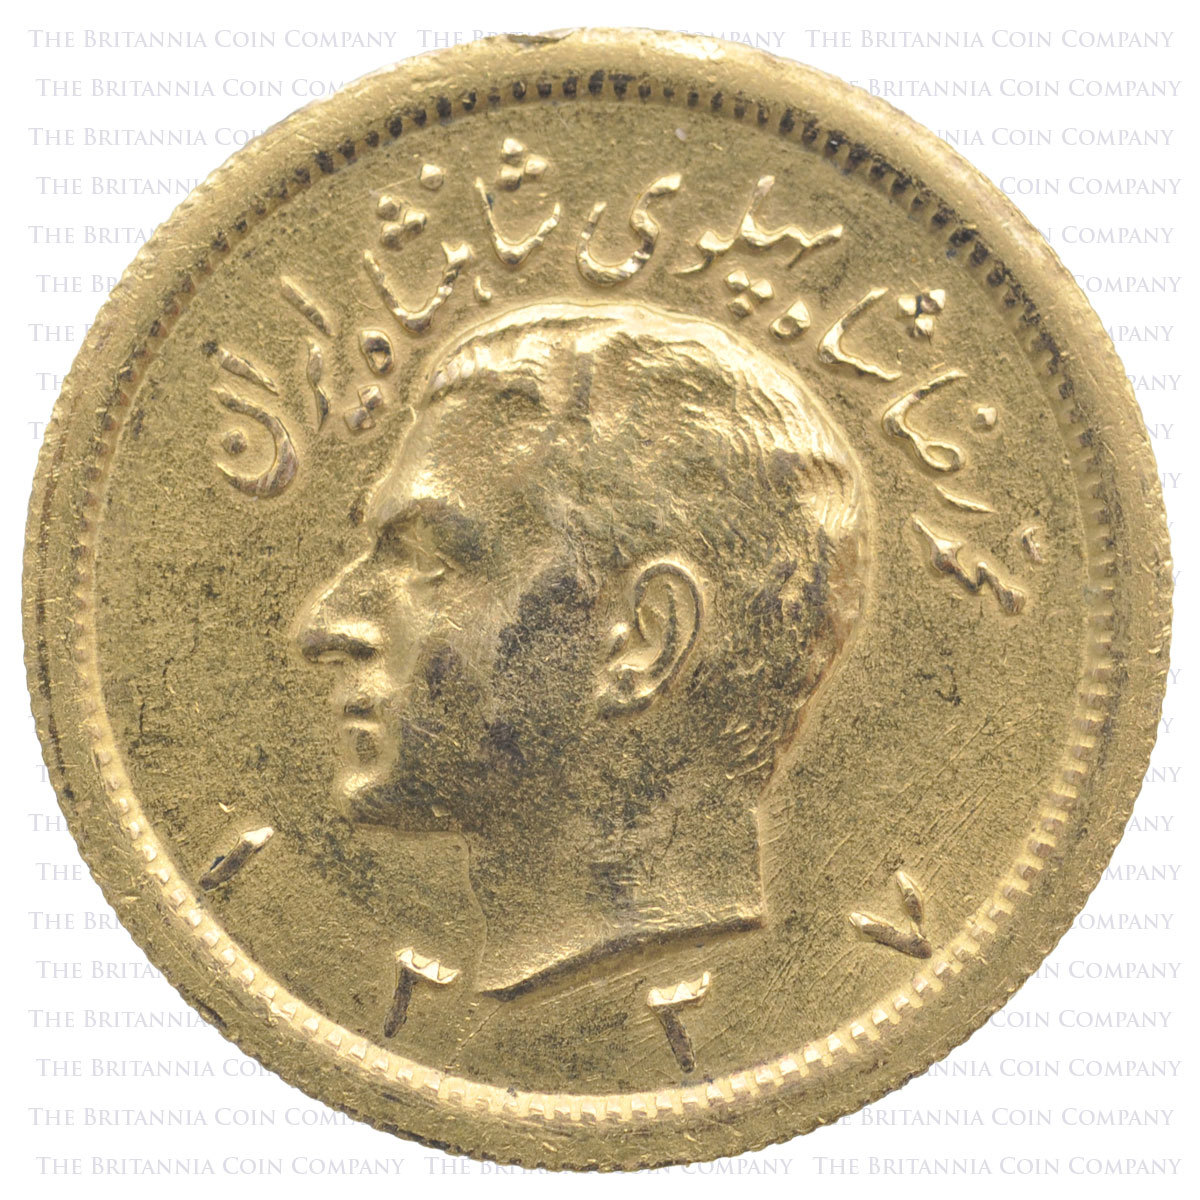 1958 Iran Gold Pahlavi